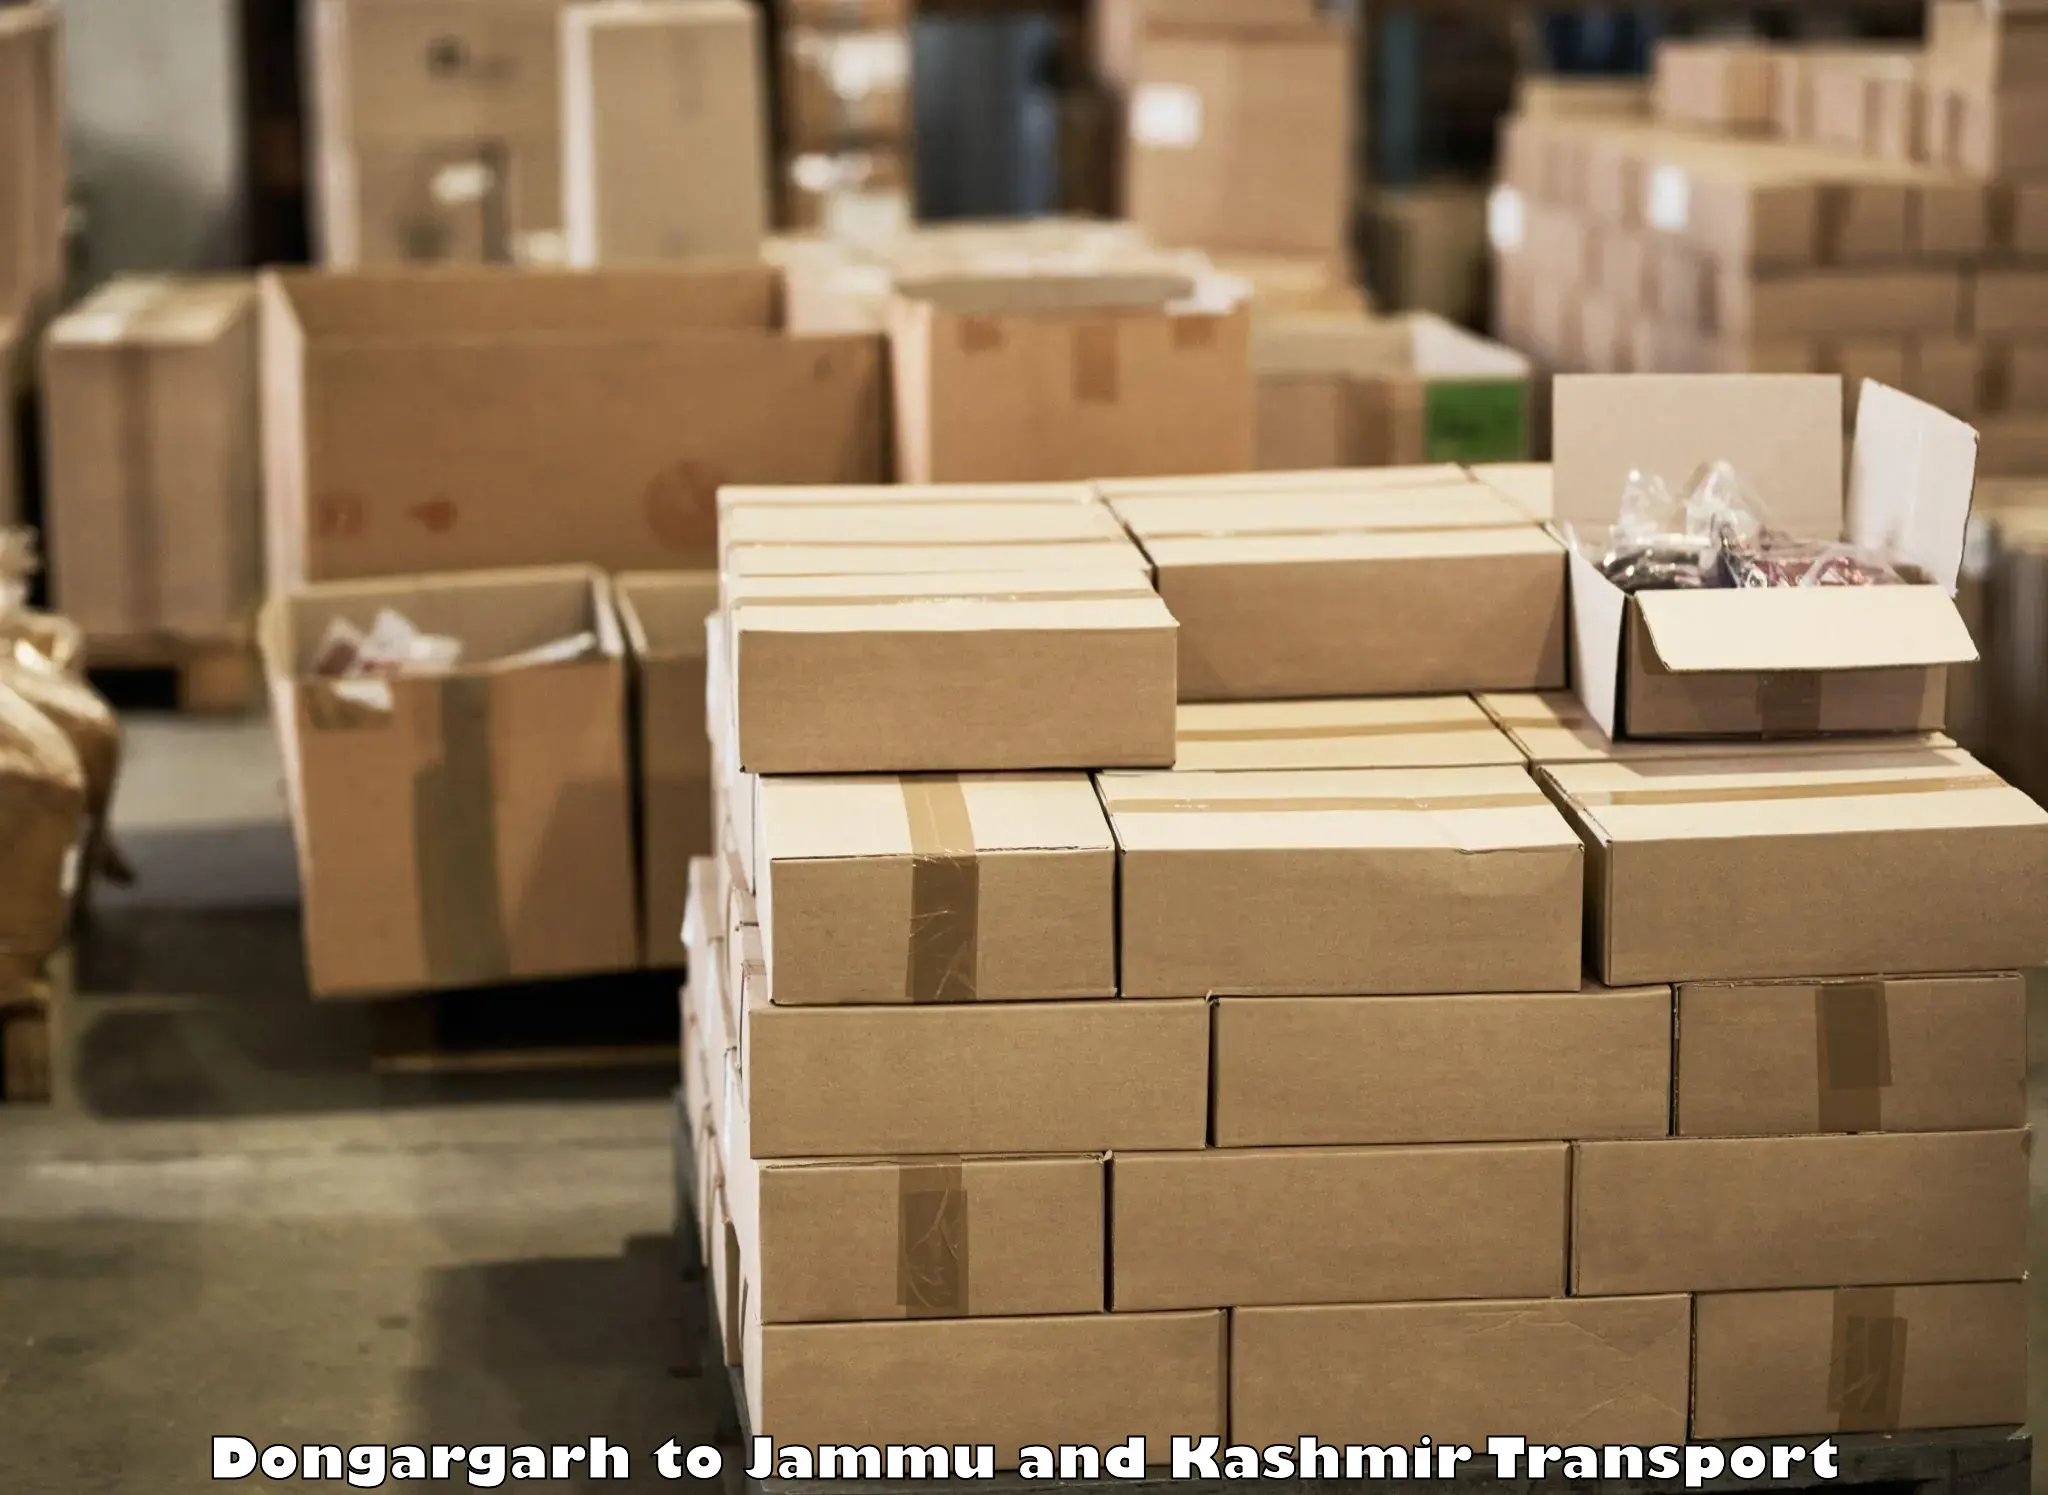 Daily parcel service transport in Dongargarh to Kargil